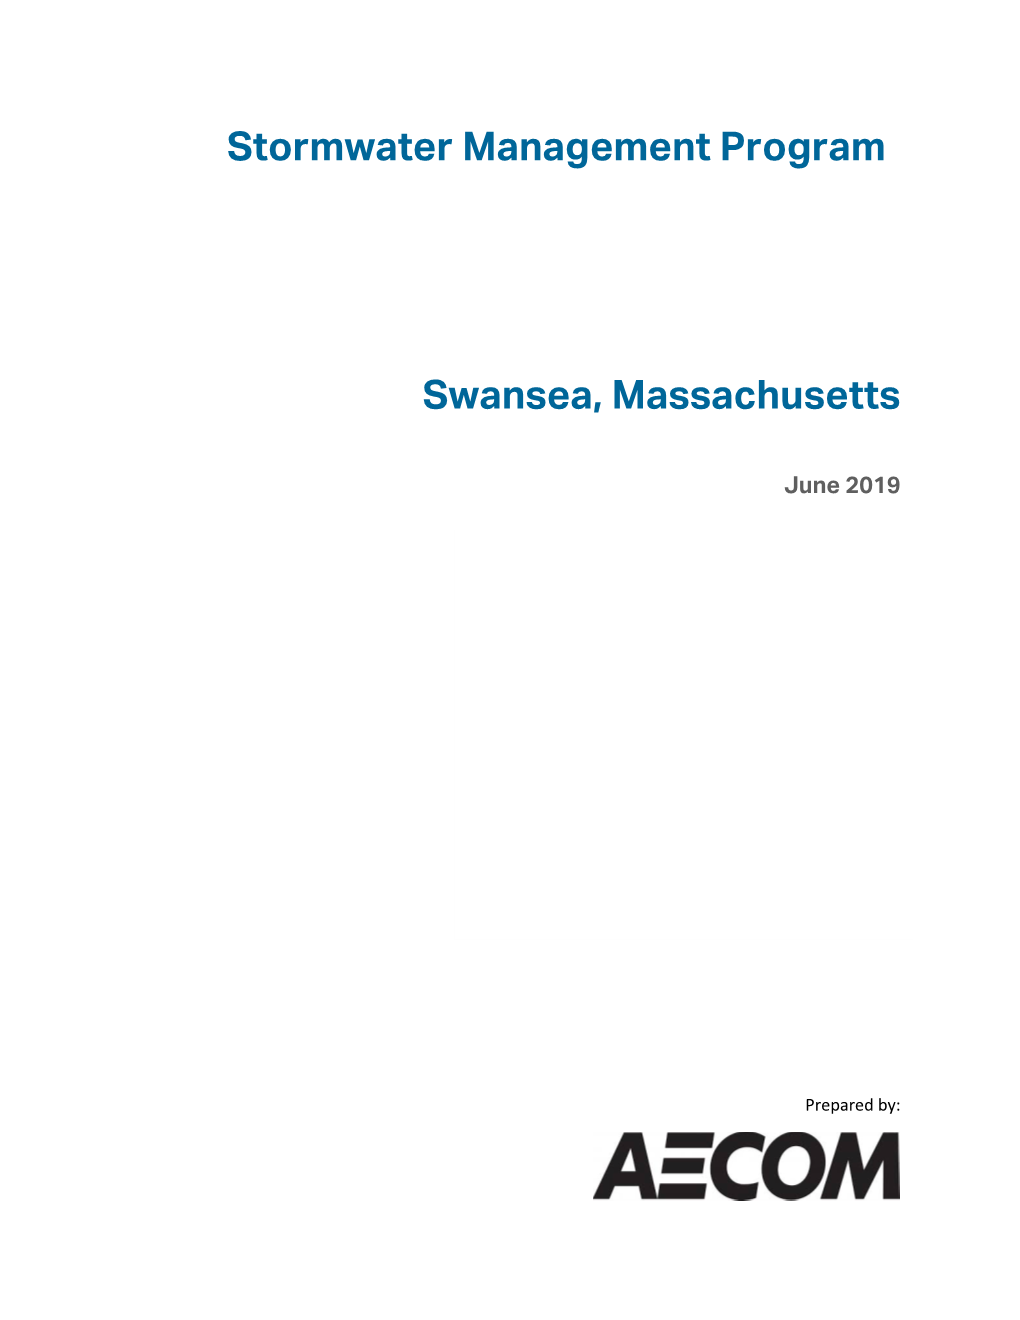 Stormwater Management Program Swansea, Massachusetts